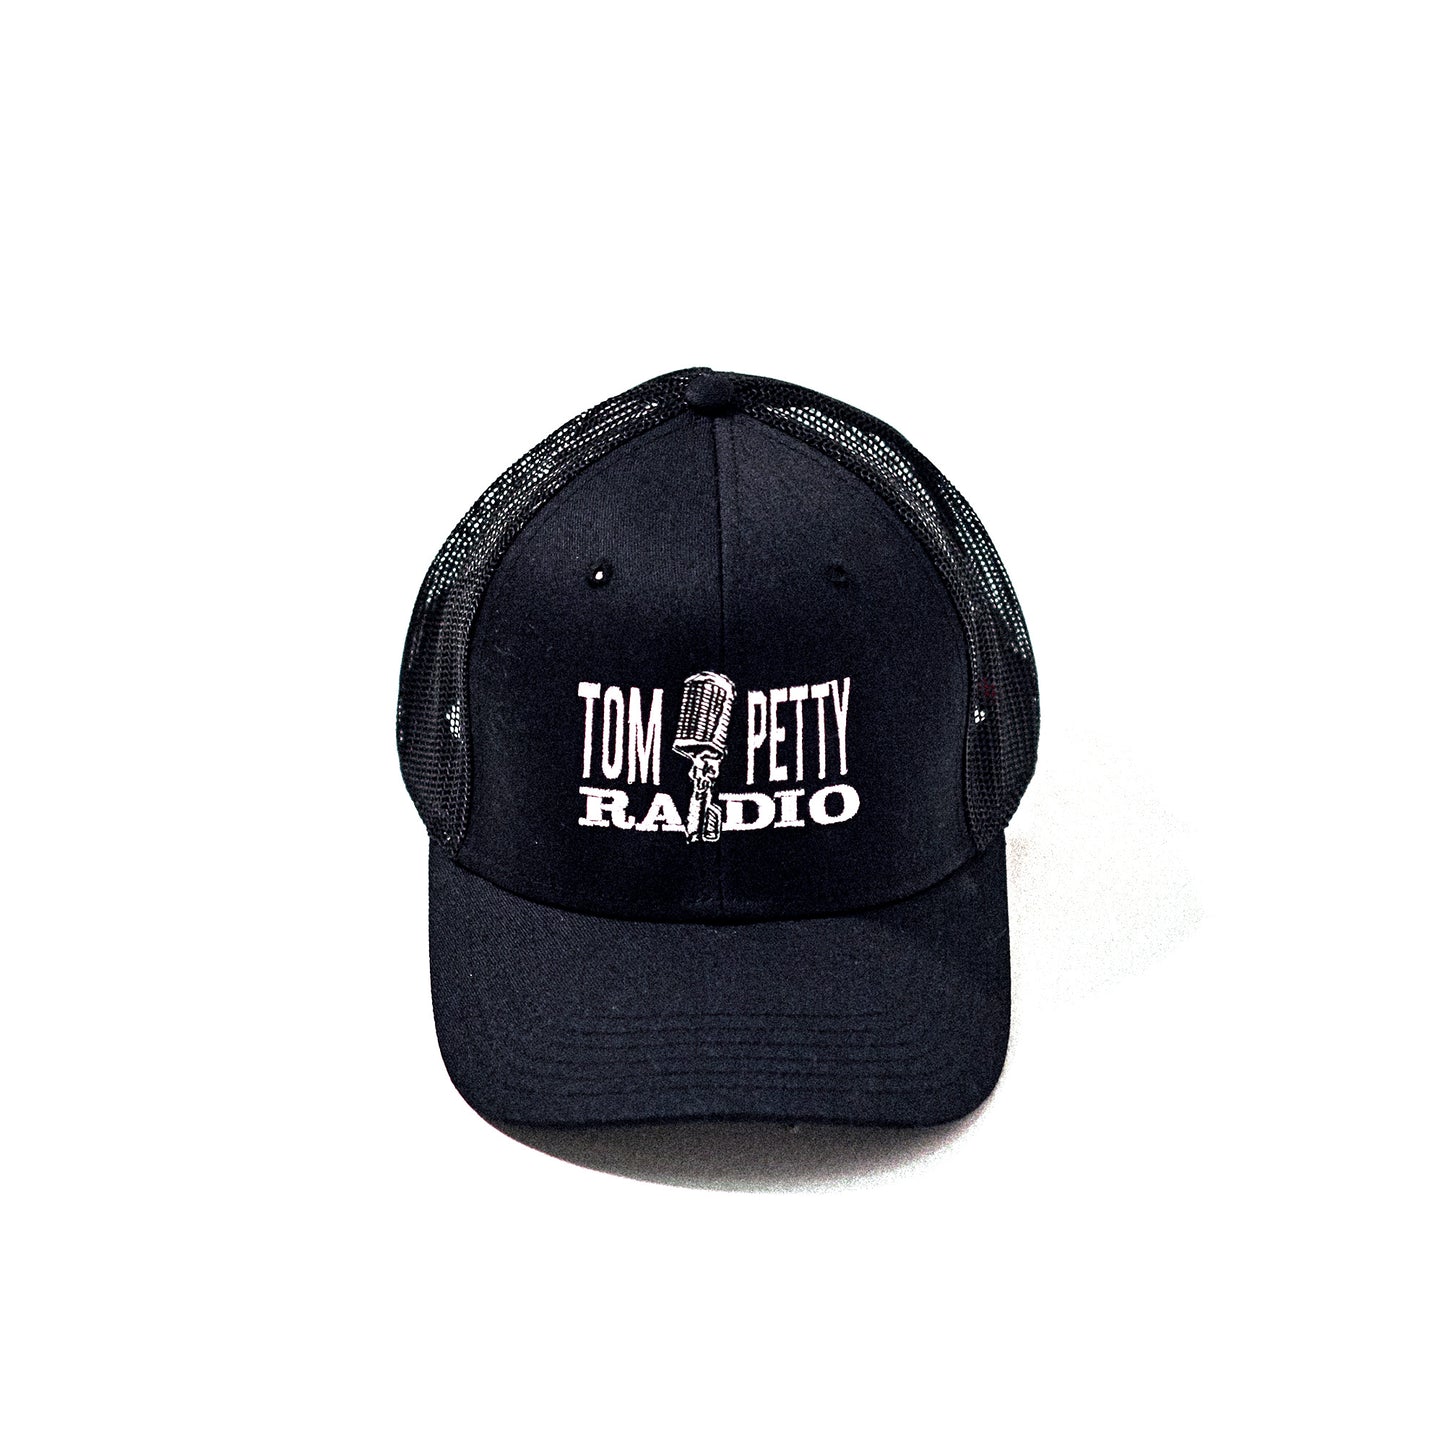 Tom Petty Radio Trucker Hat